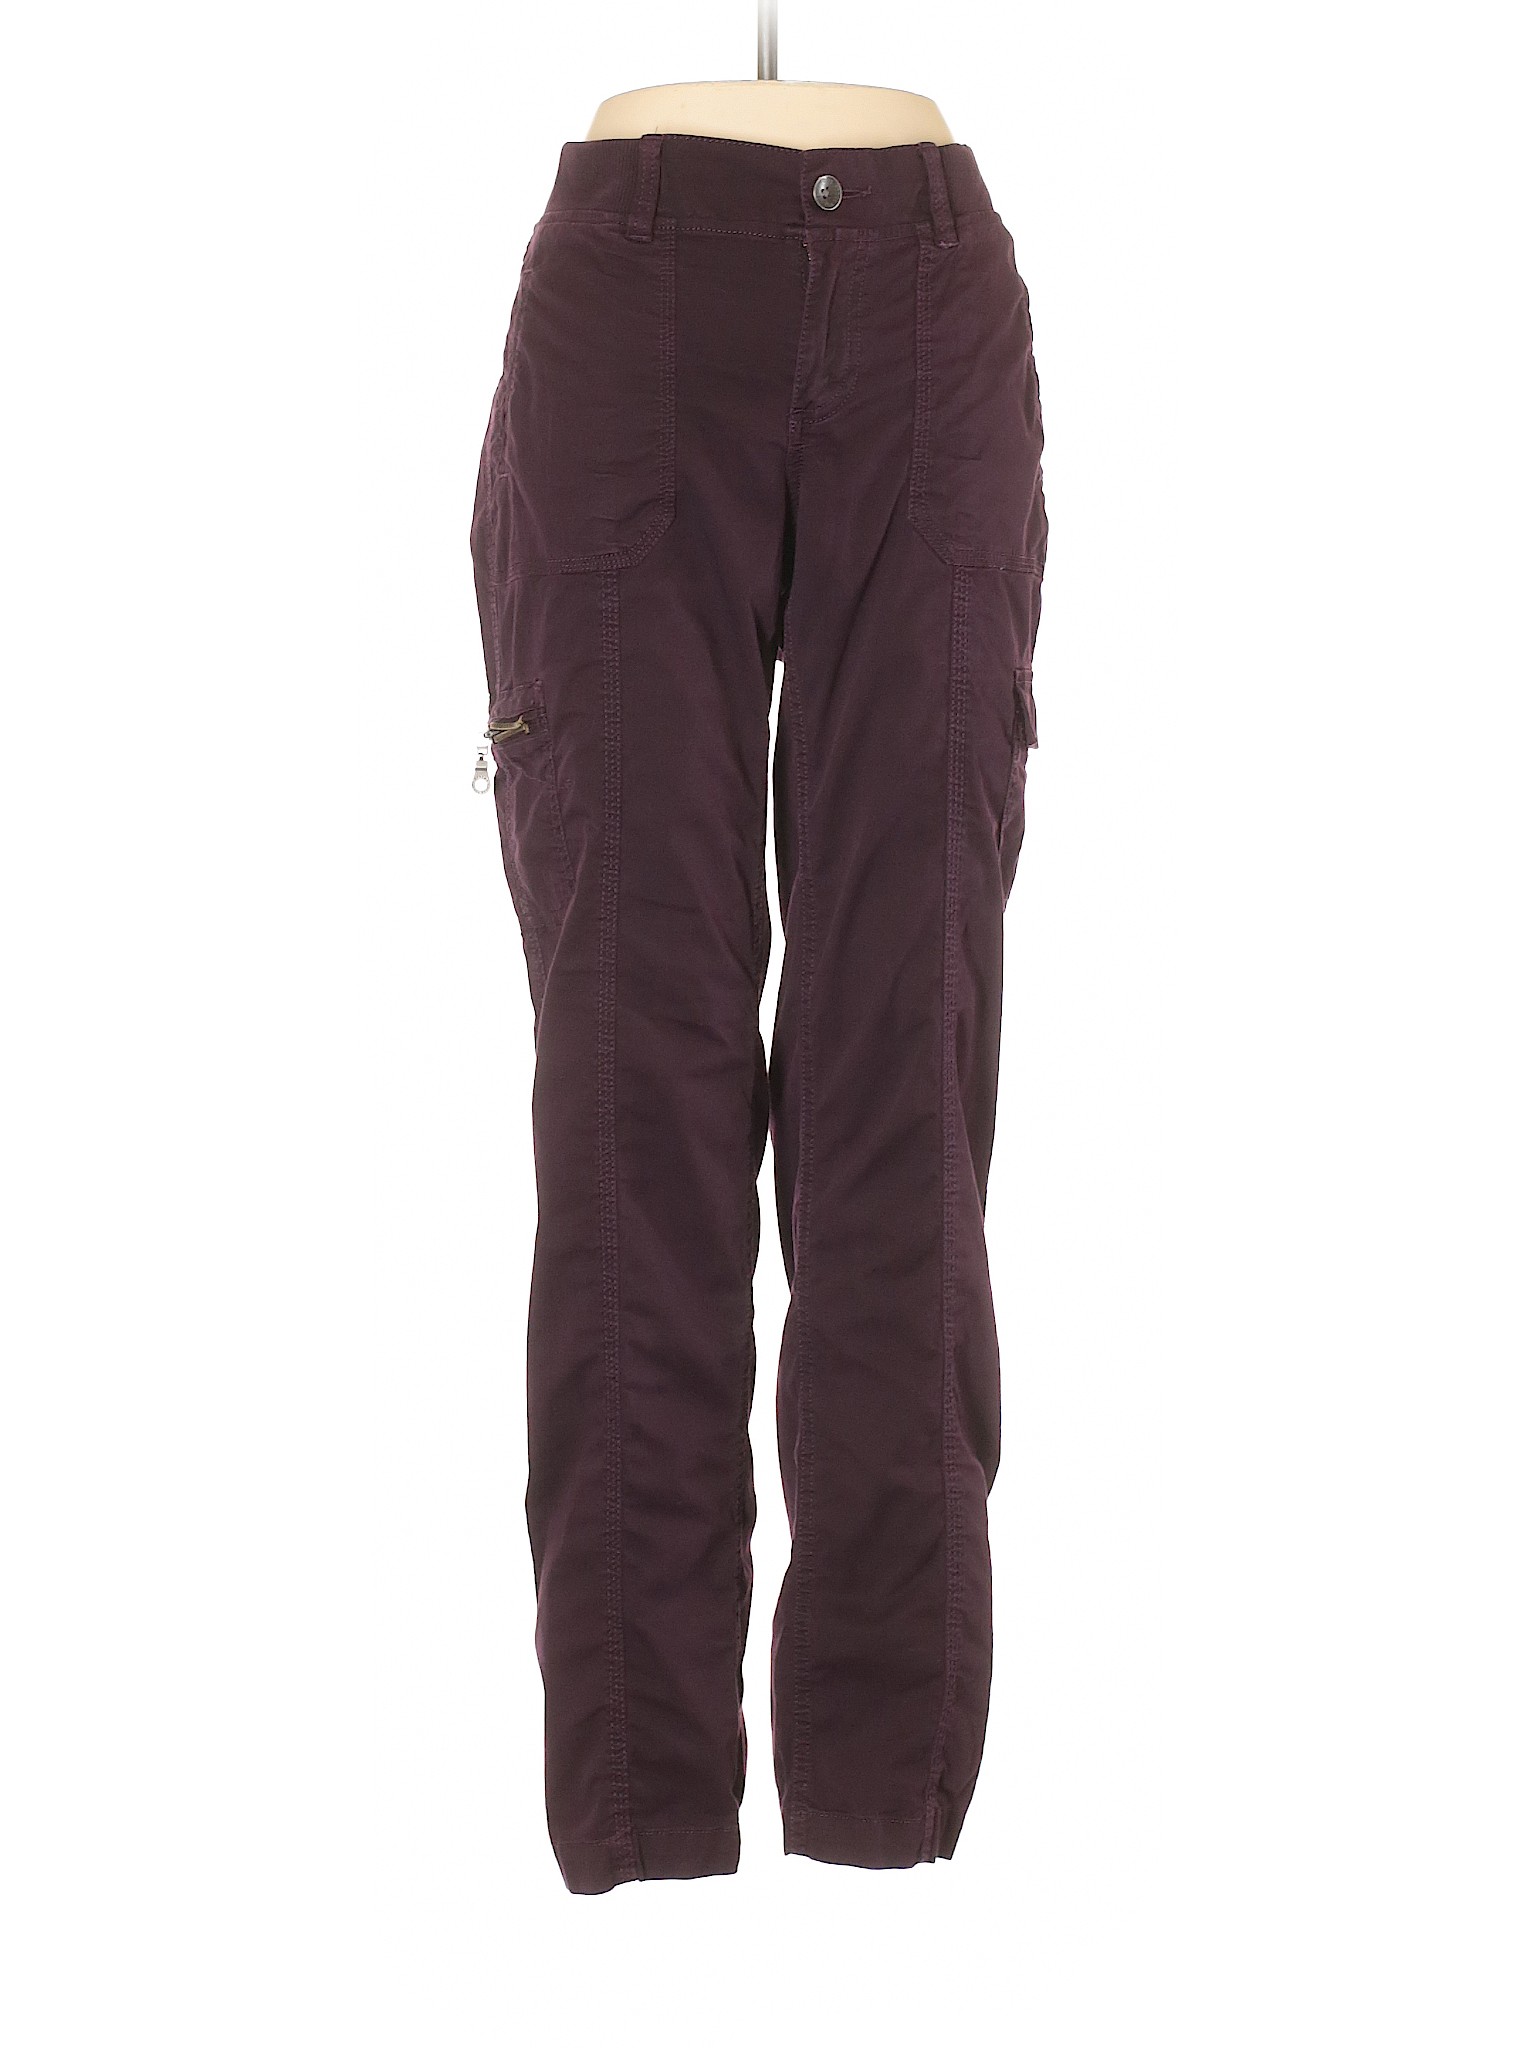 SONOMA life + style Solid Dark Purple Cargo Pants Size 4 - 77% off ...